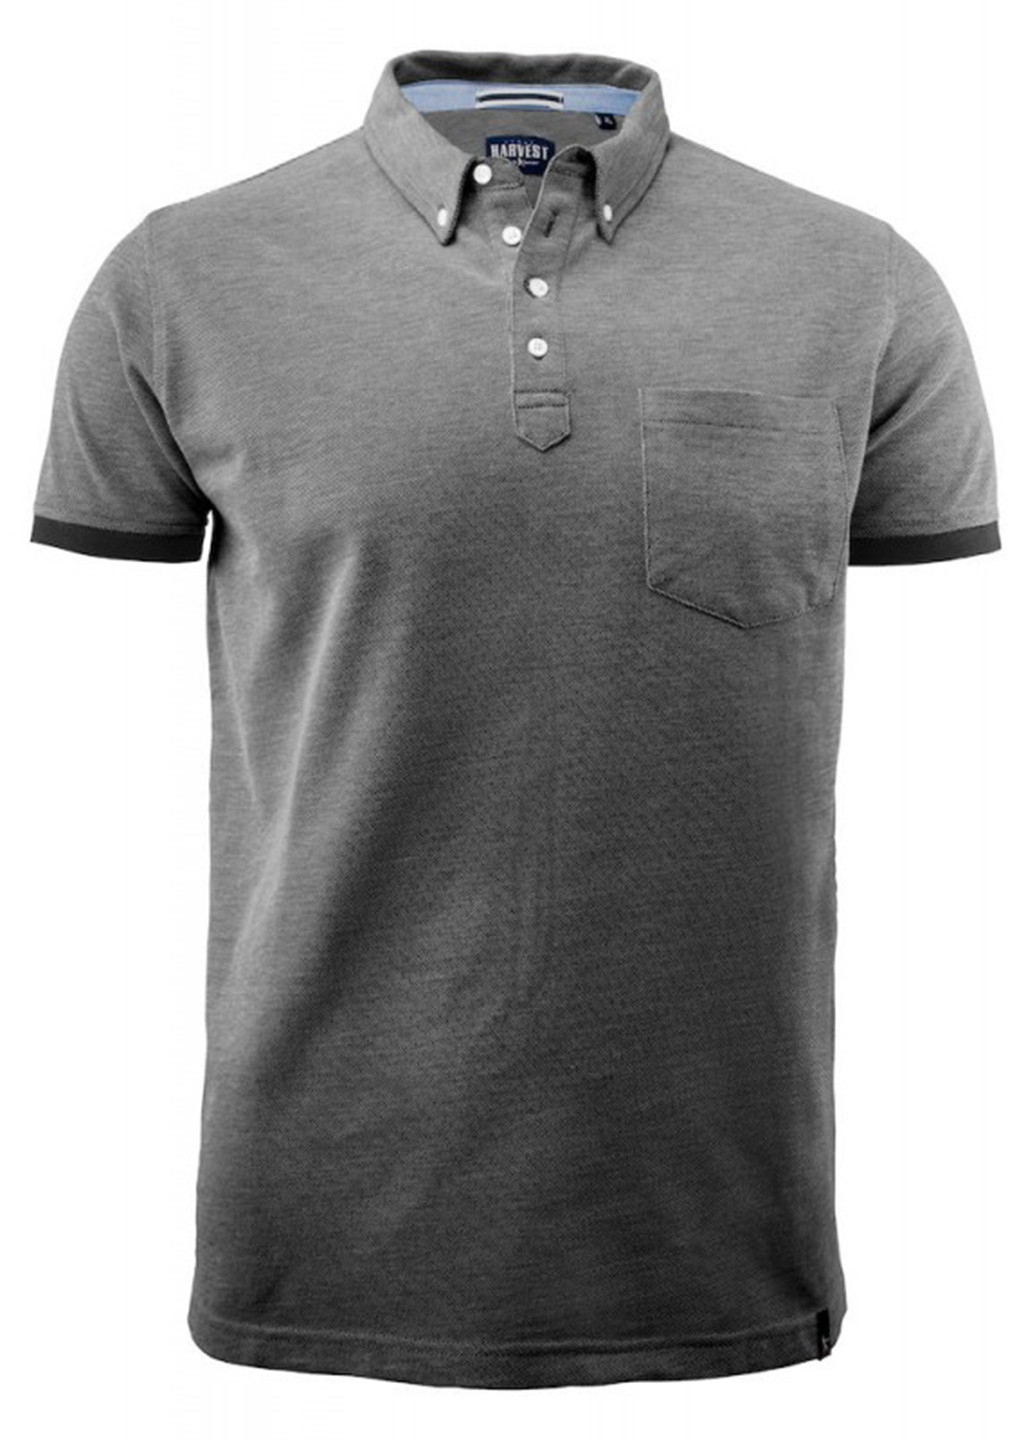 Черная футболка-поло для мужчин James Harvest меланжевая